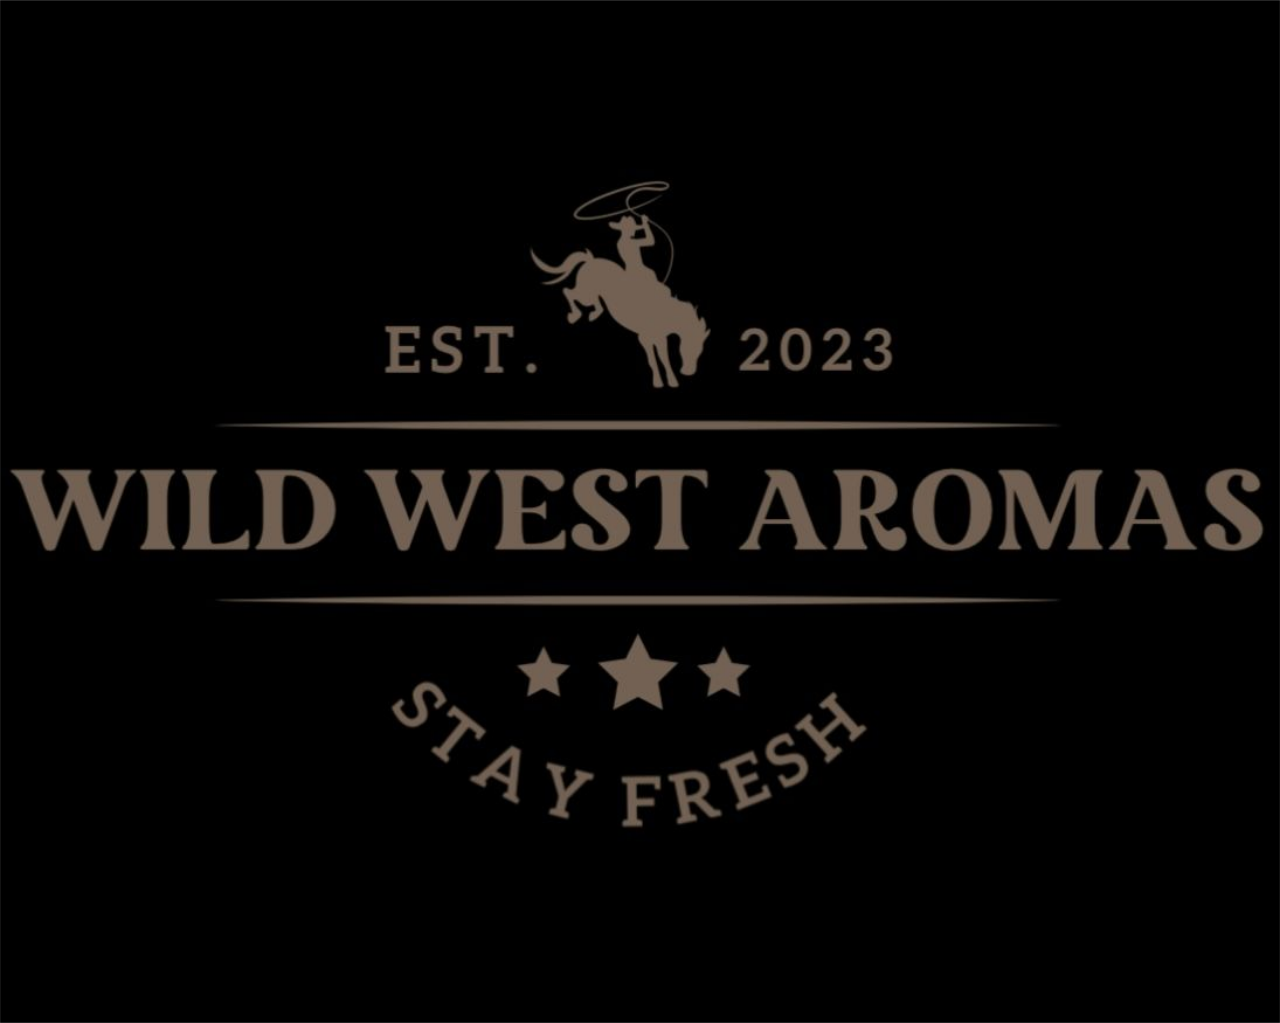 Wild West aromas 's logo